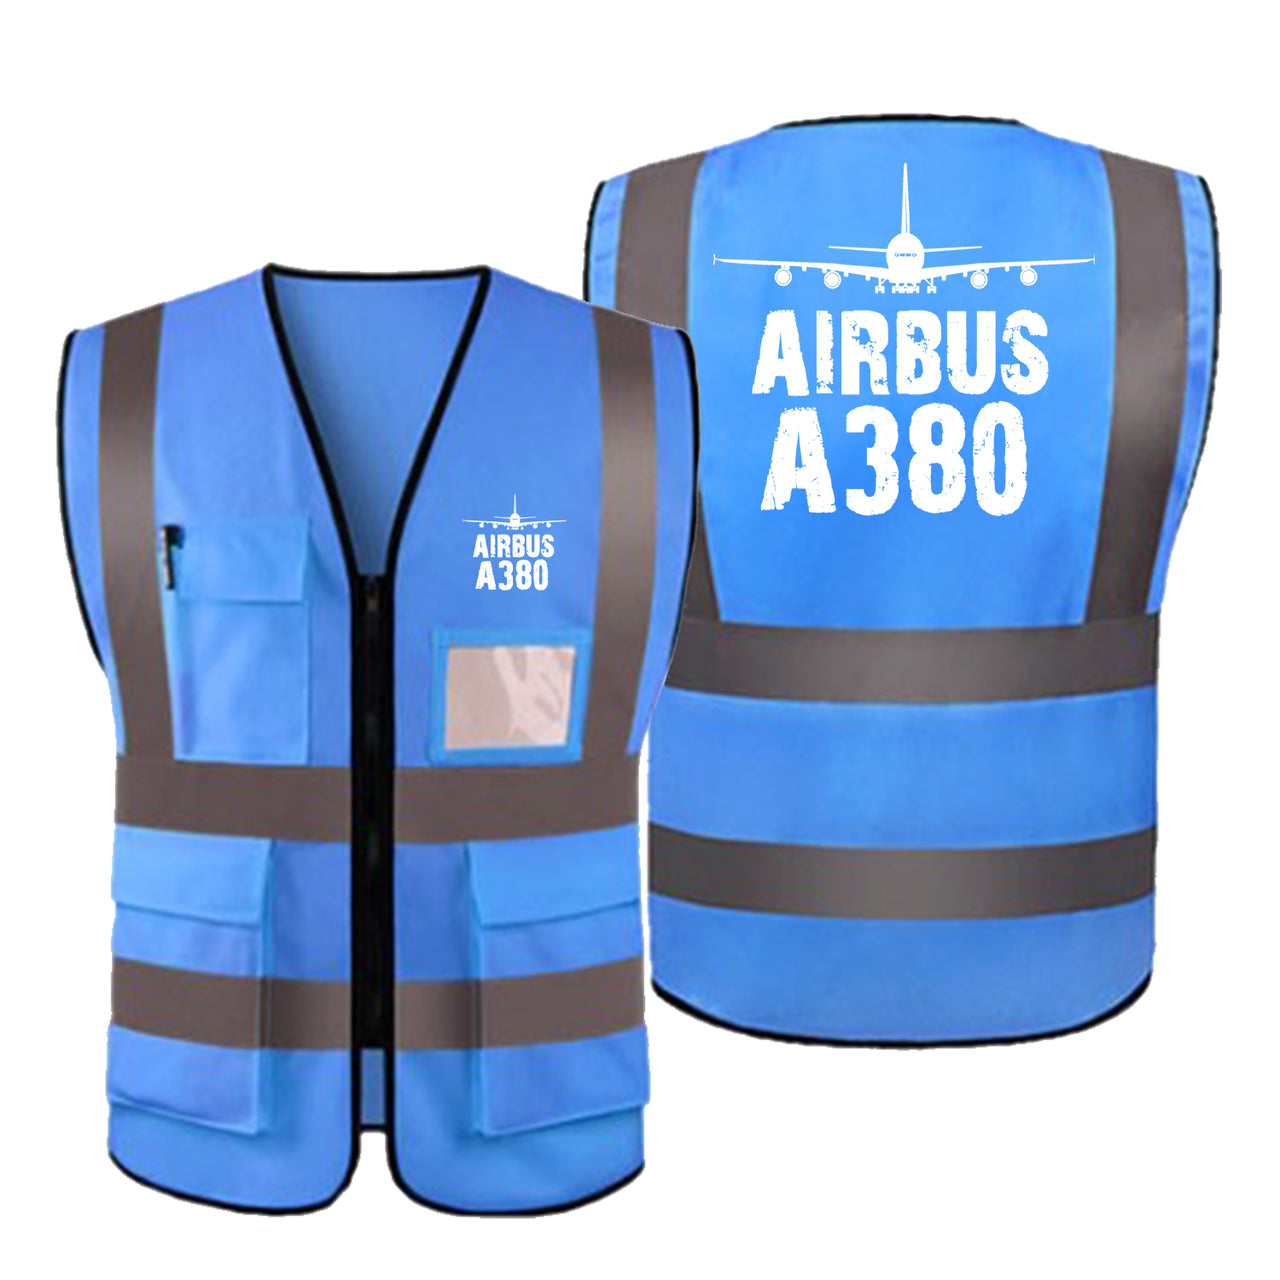 Airbus A380 & Plane Designed Reflective Vests